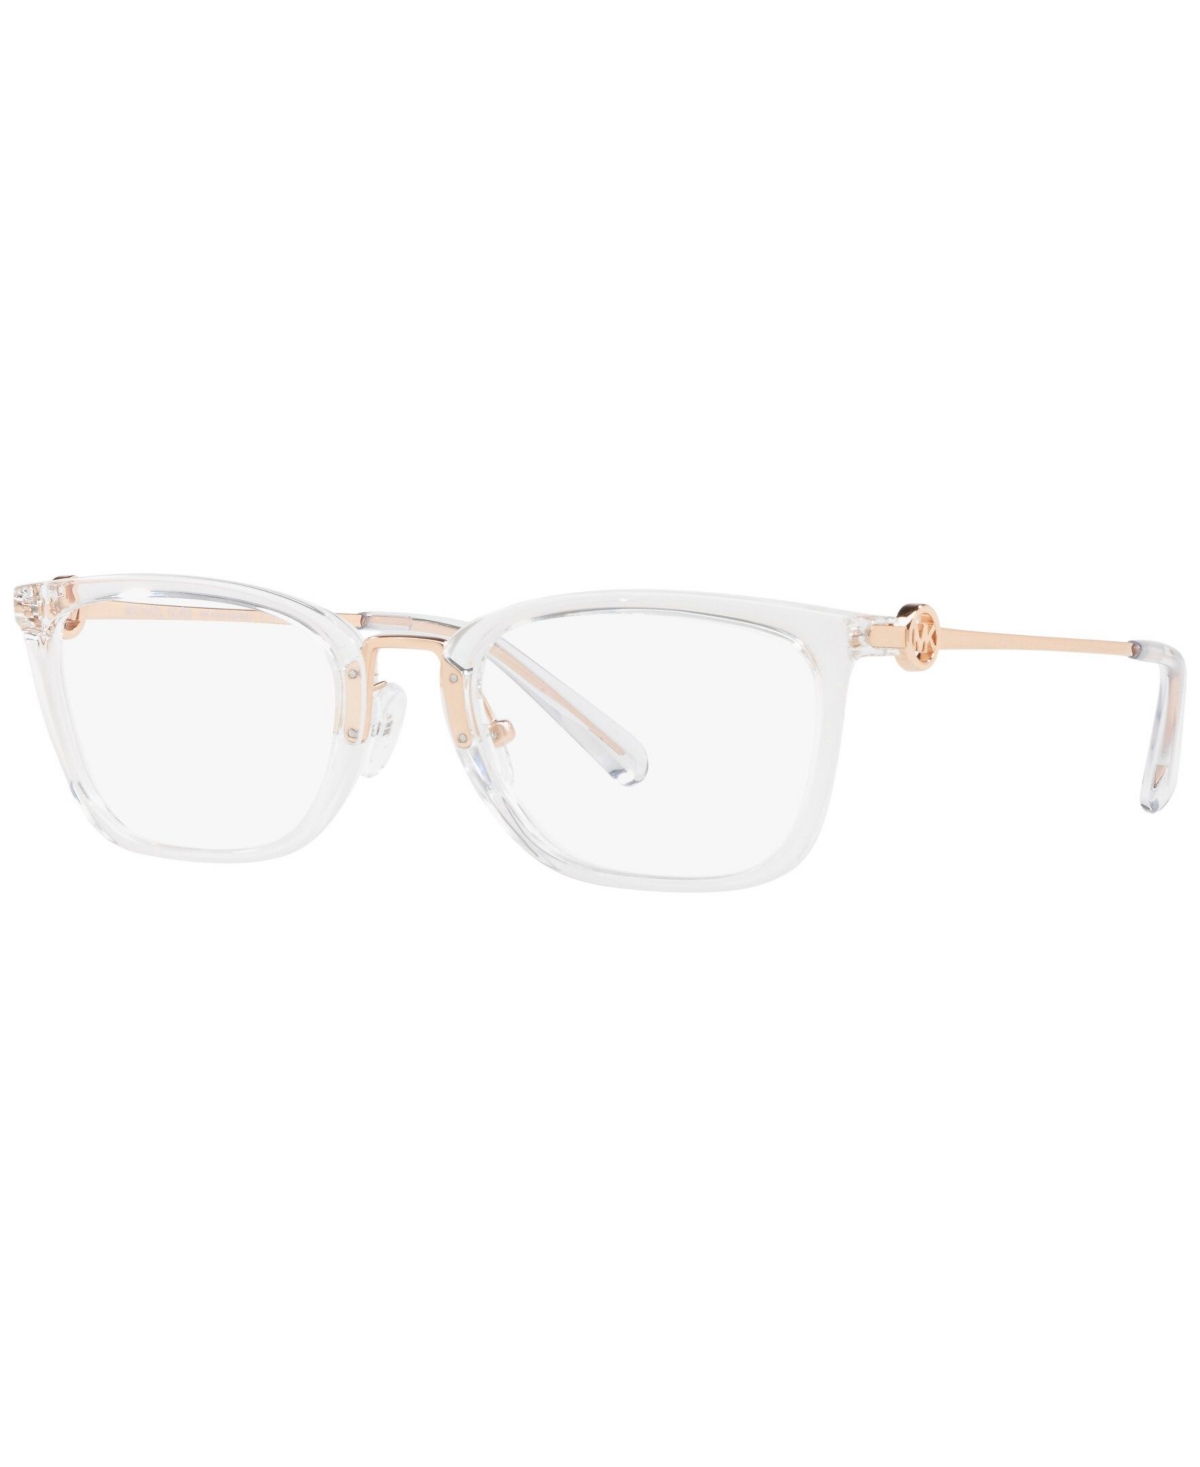 MK4054 Unisex Rectangle Eyeglasses - Crystal